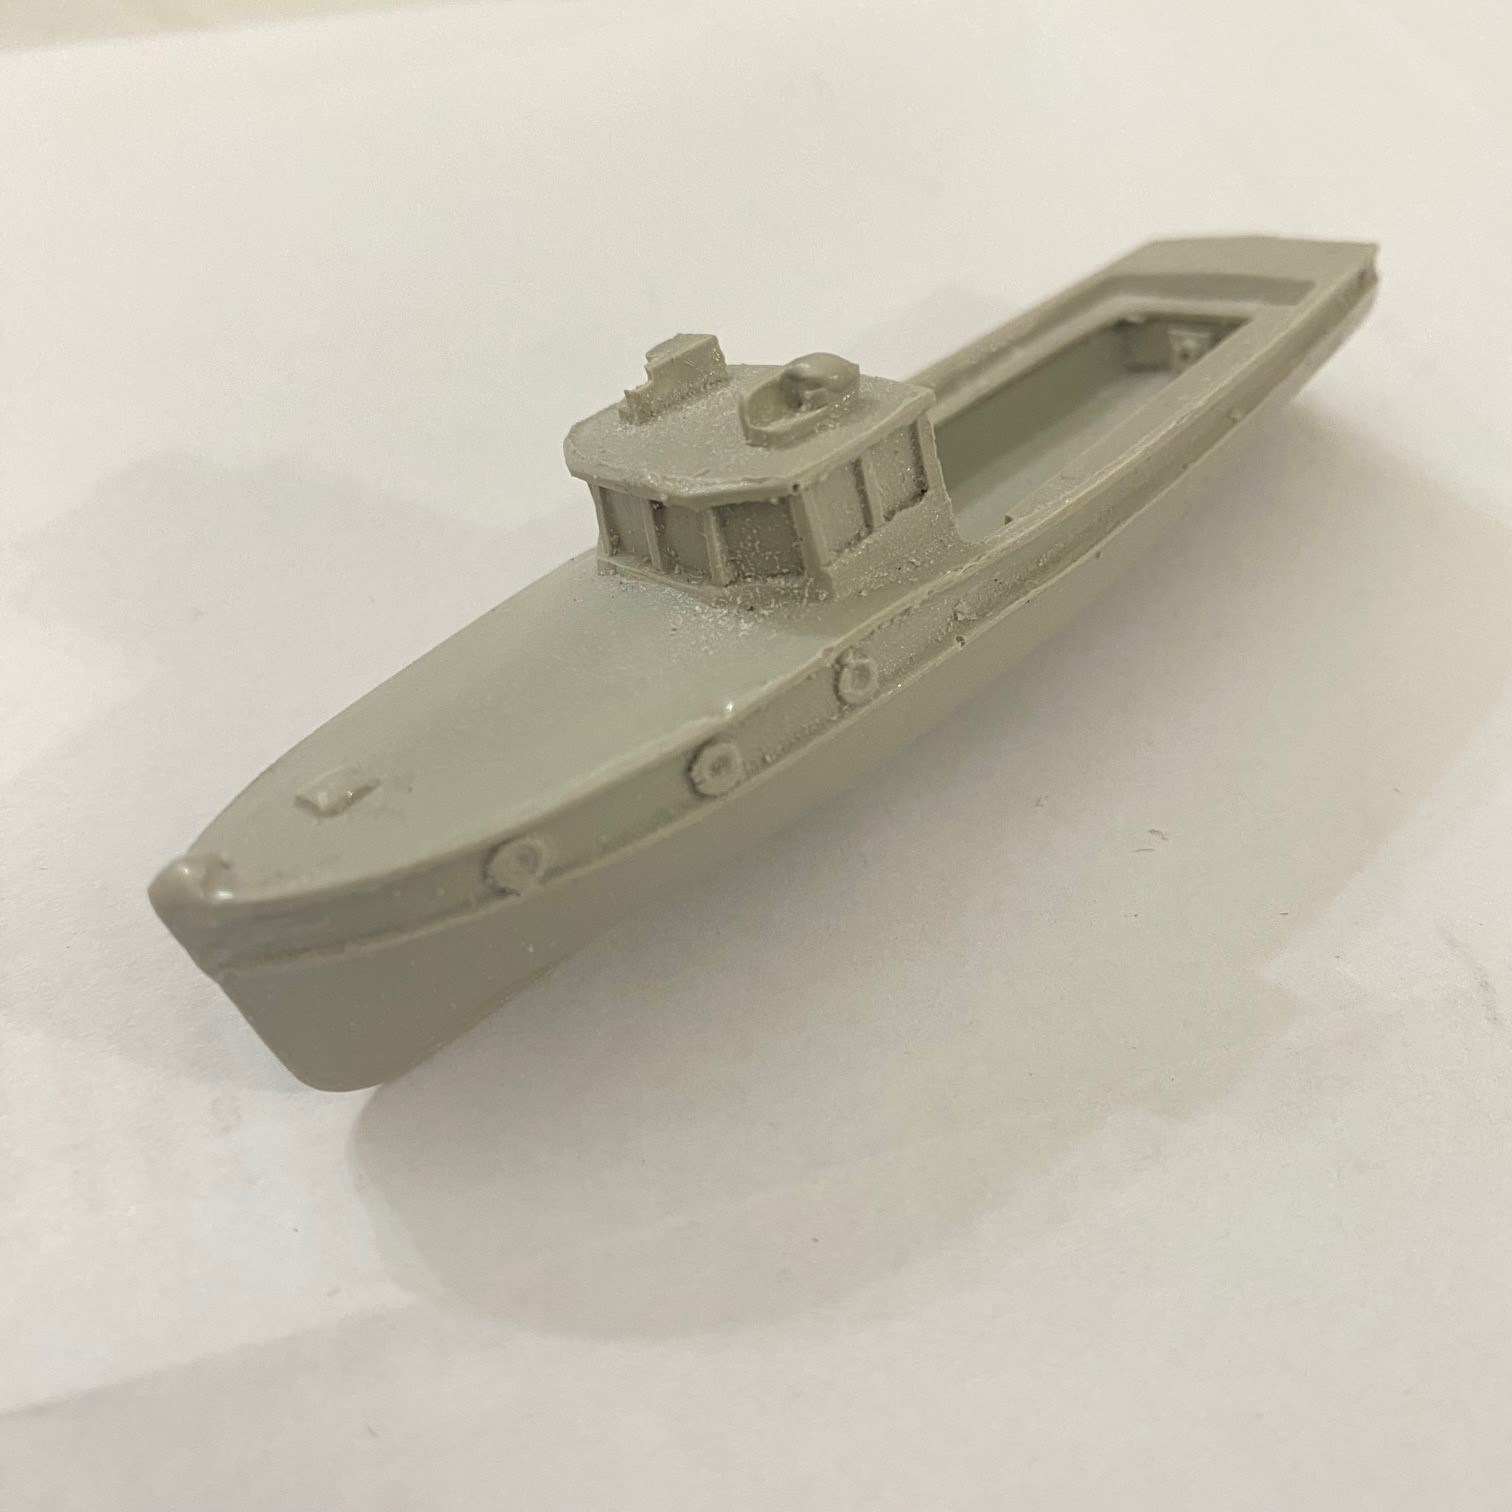 Verkehrsboot (Workboat/Picket Type) 87mm 1:128 Scale